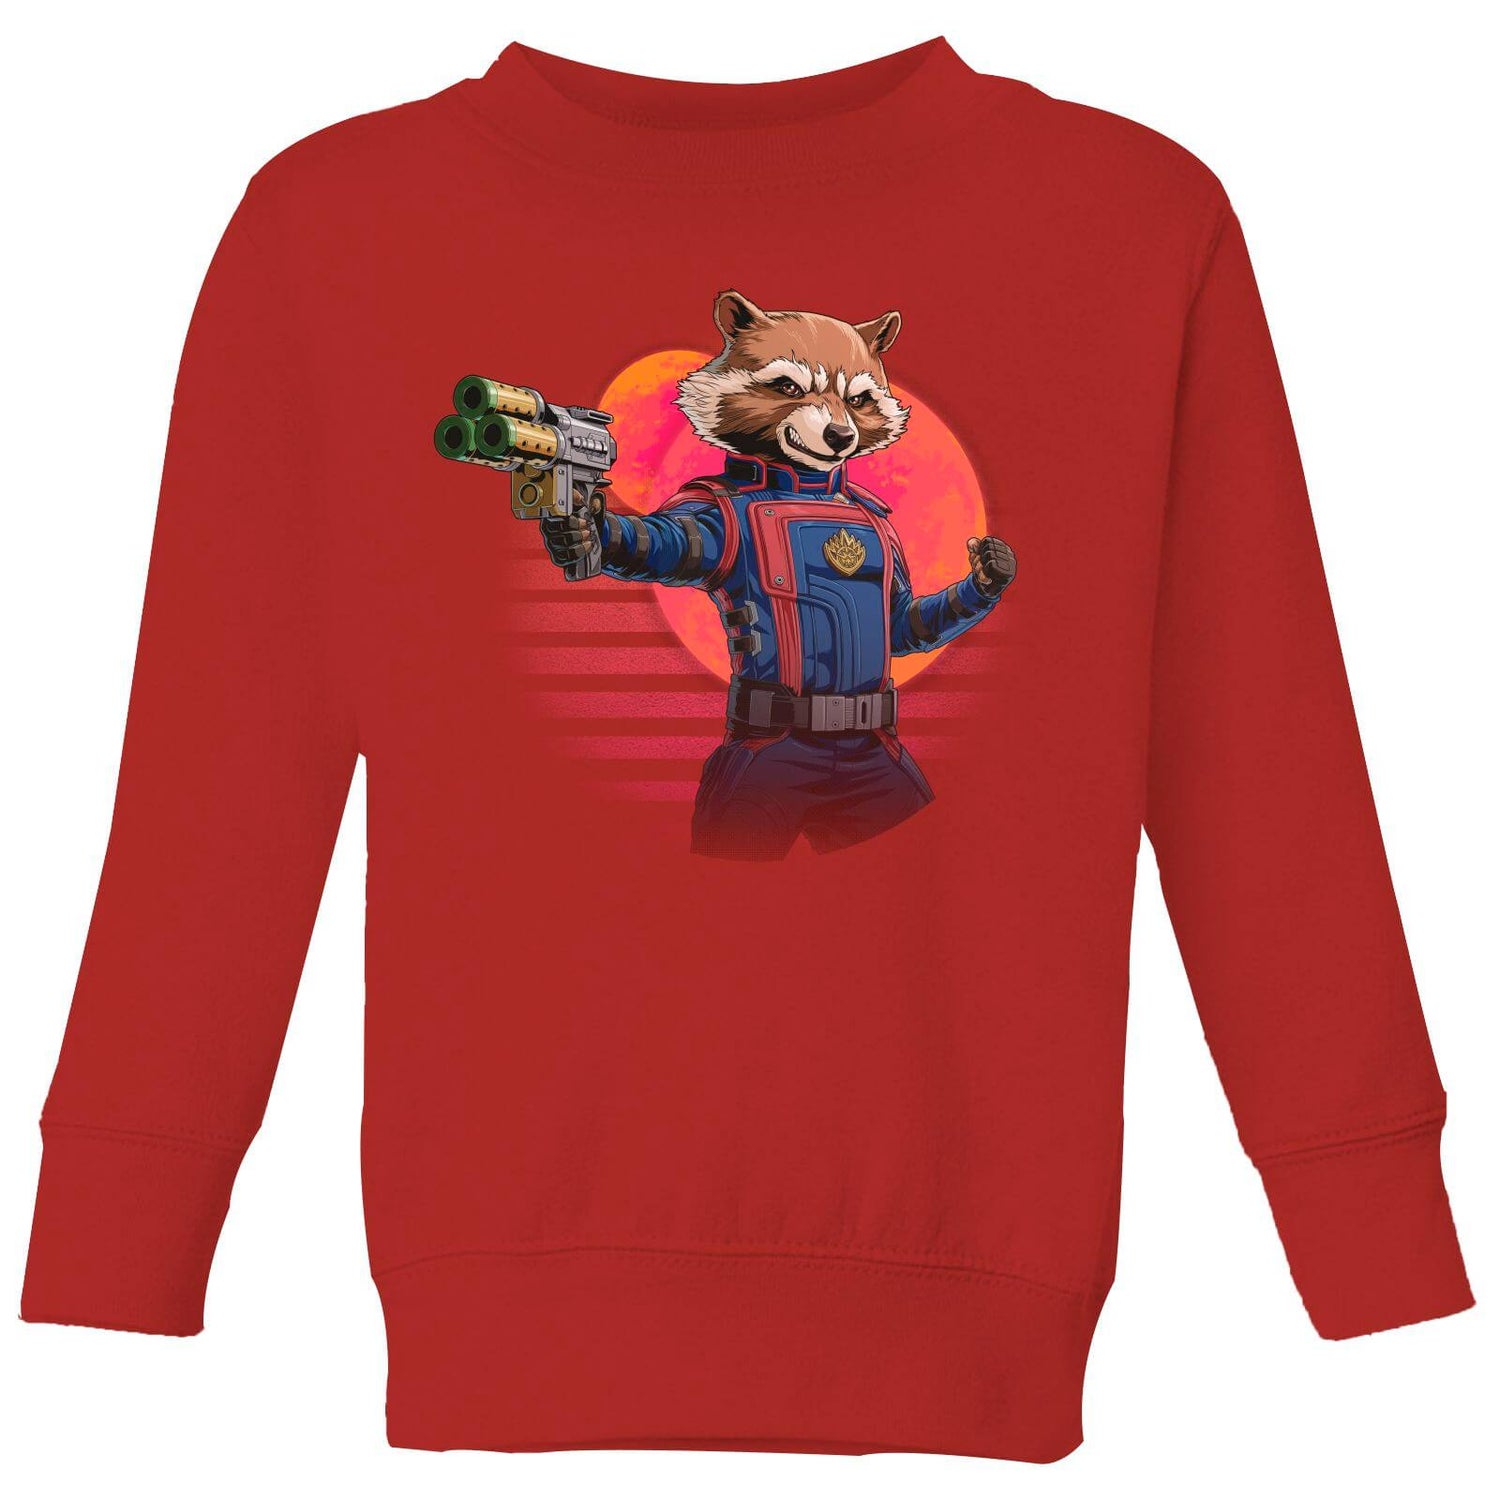 Guardians of the Galaxy Retro Rocket Raccoon Kids' Sweatshirt - Red